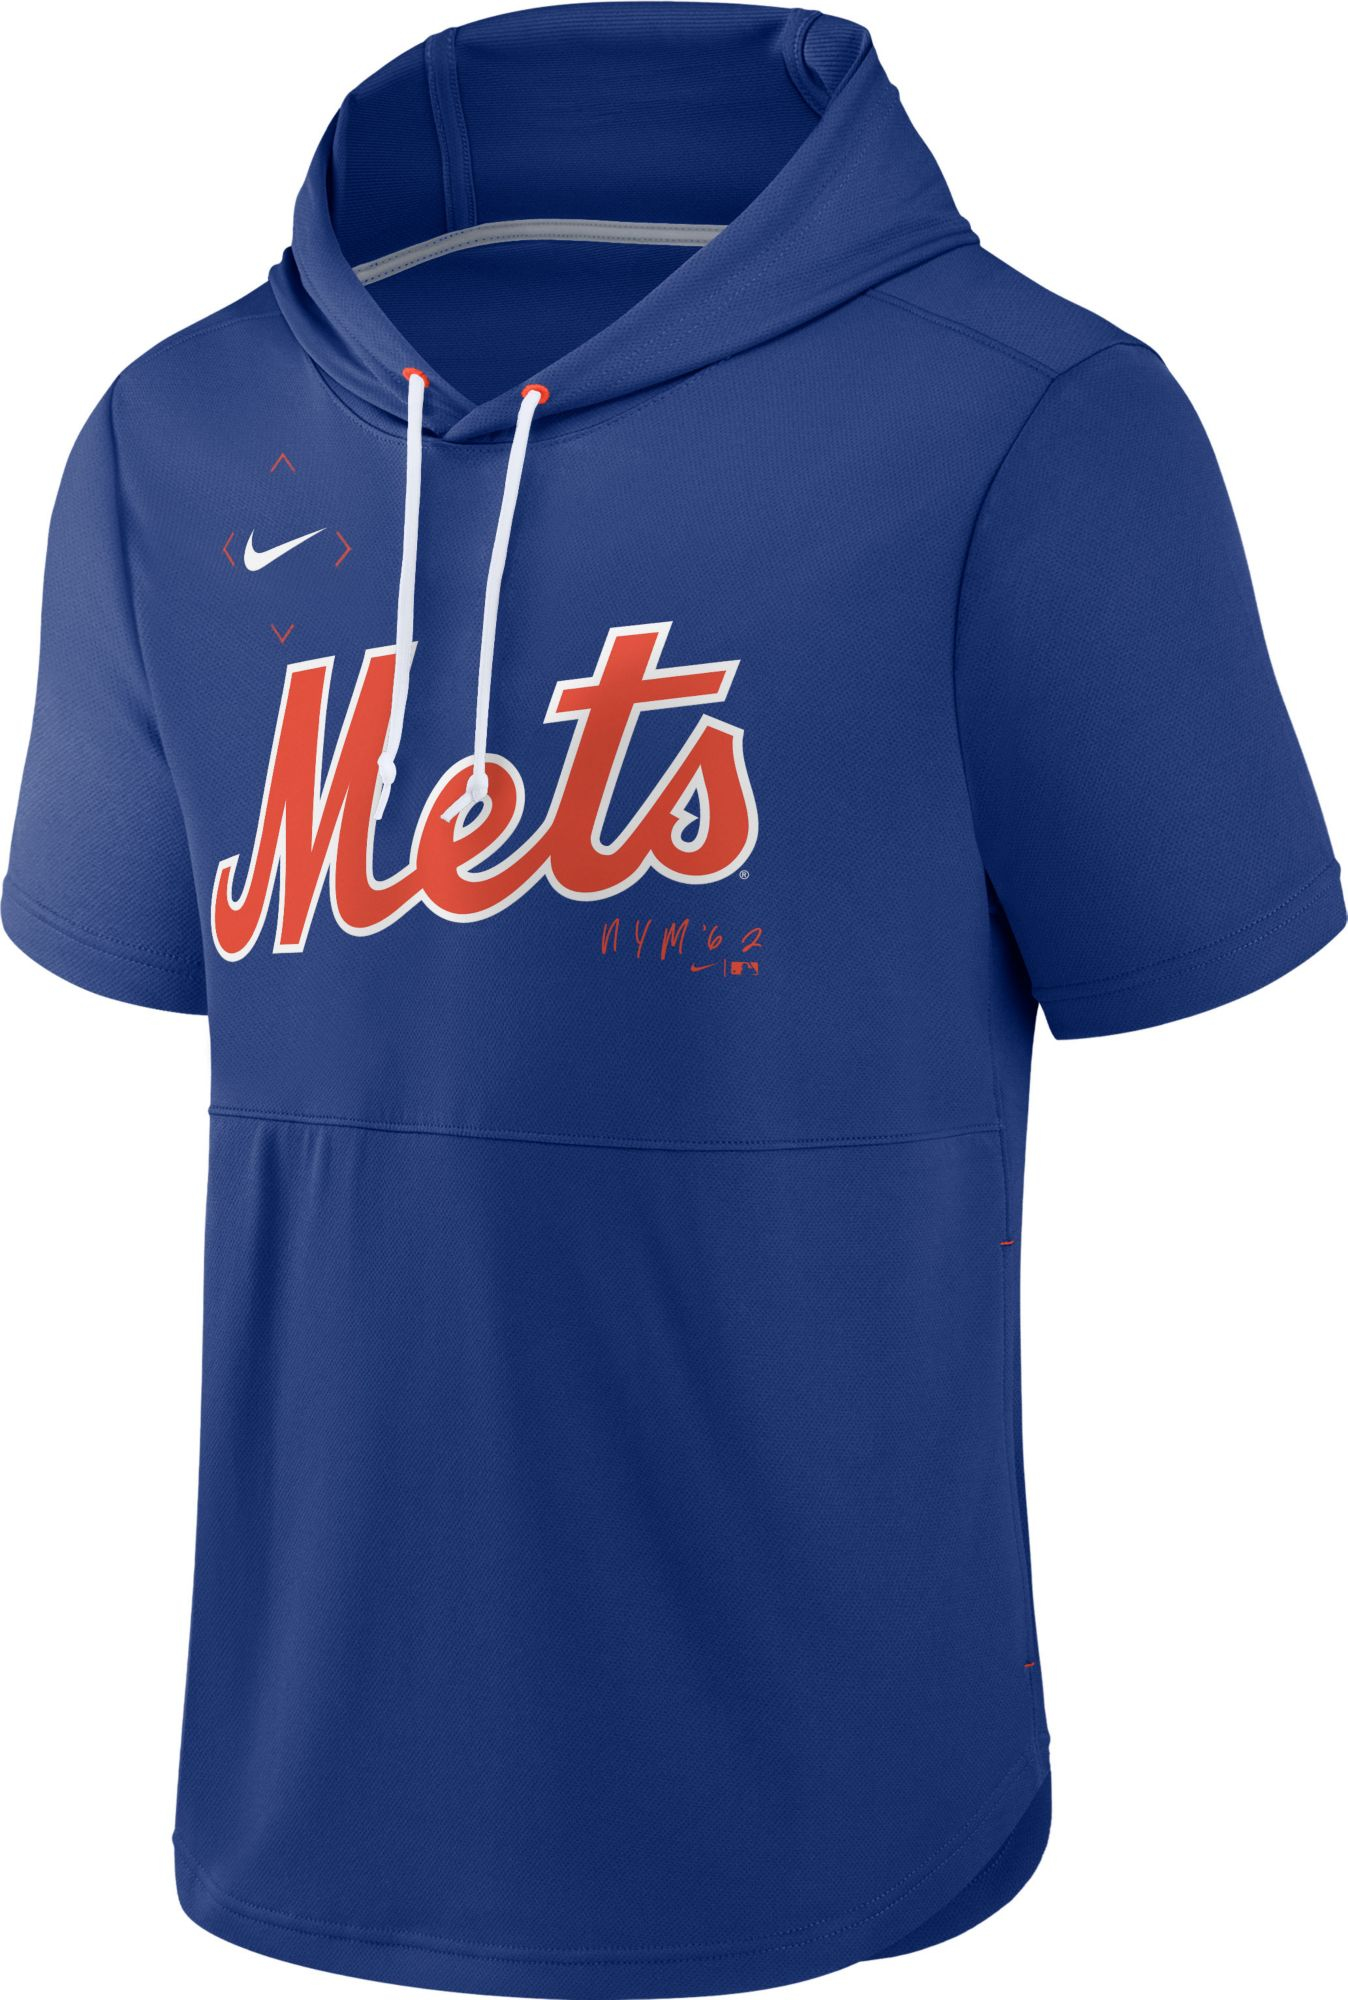 Nike Men's New York Mets Blue Springer Short Sleeve Hoodie, Small